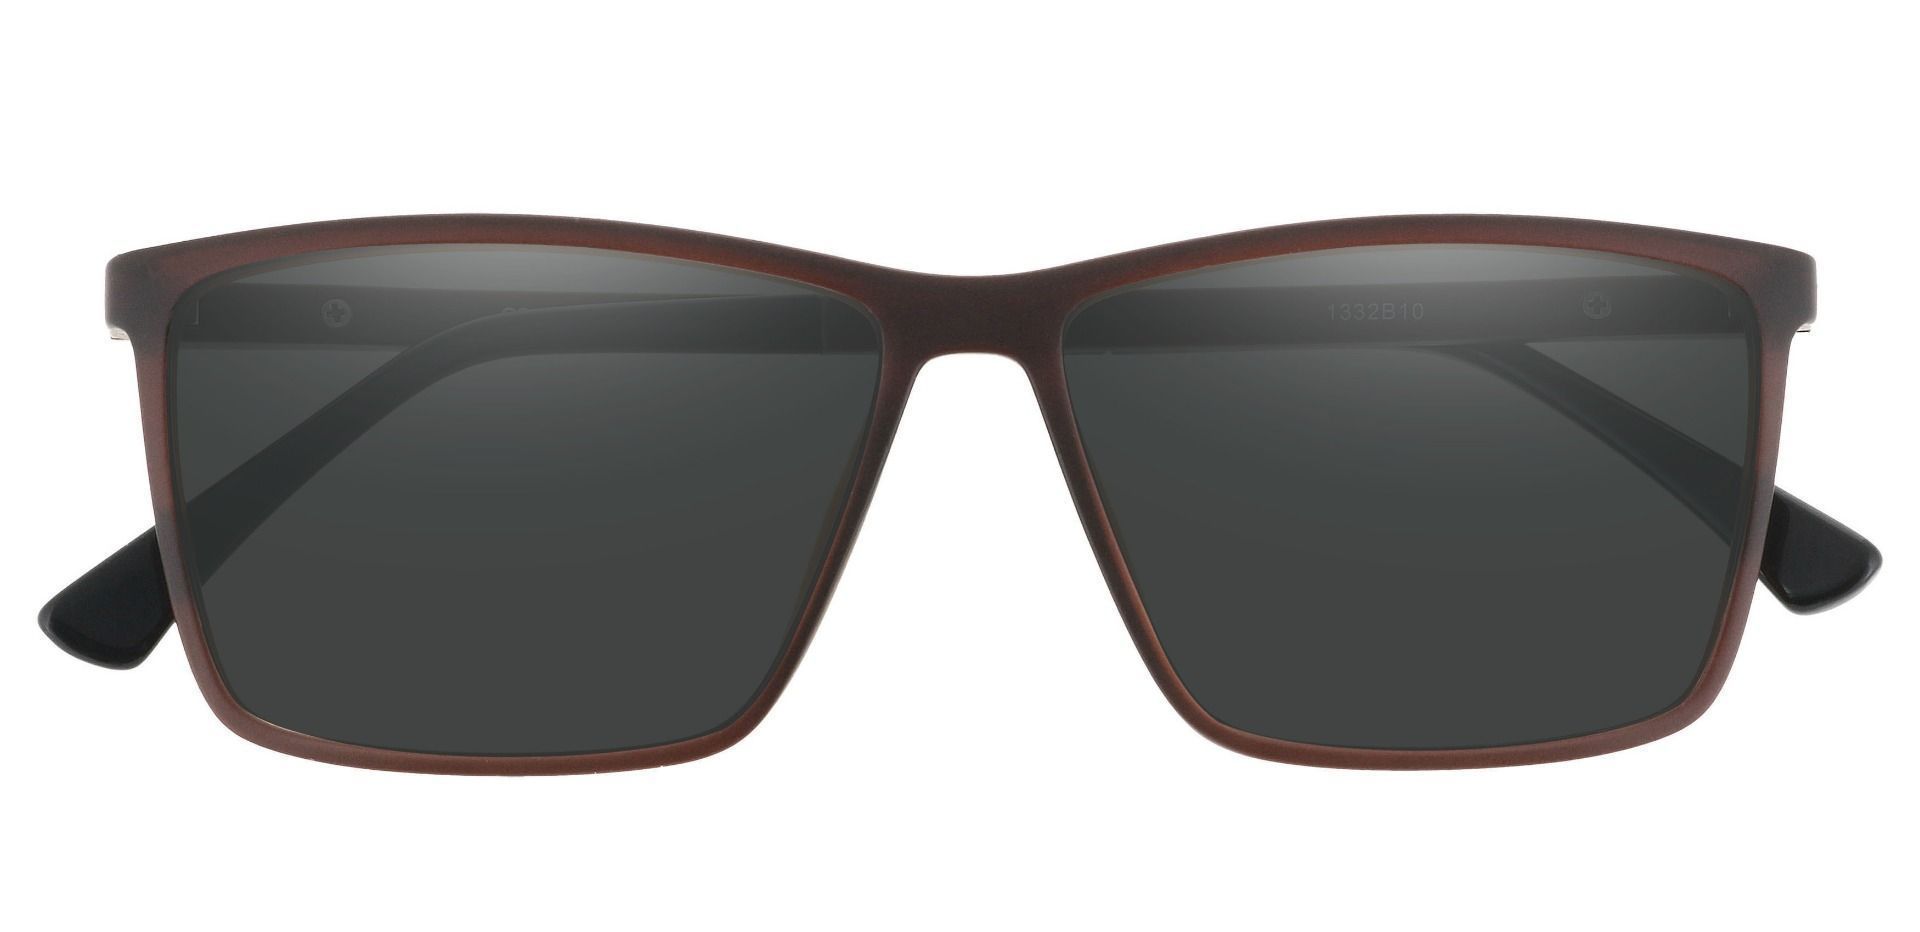 Louie Square Prescription Sunglasses - Brown Frame With Gray Lenses ...